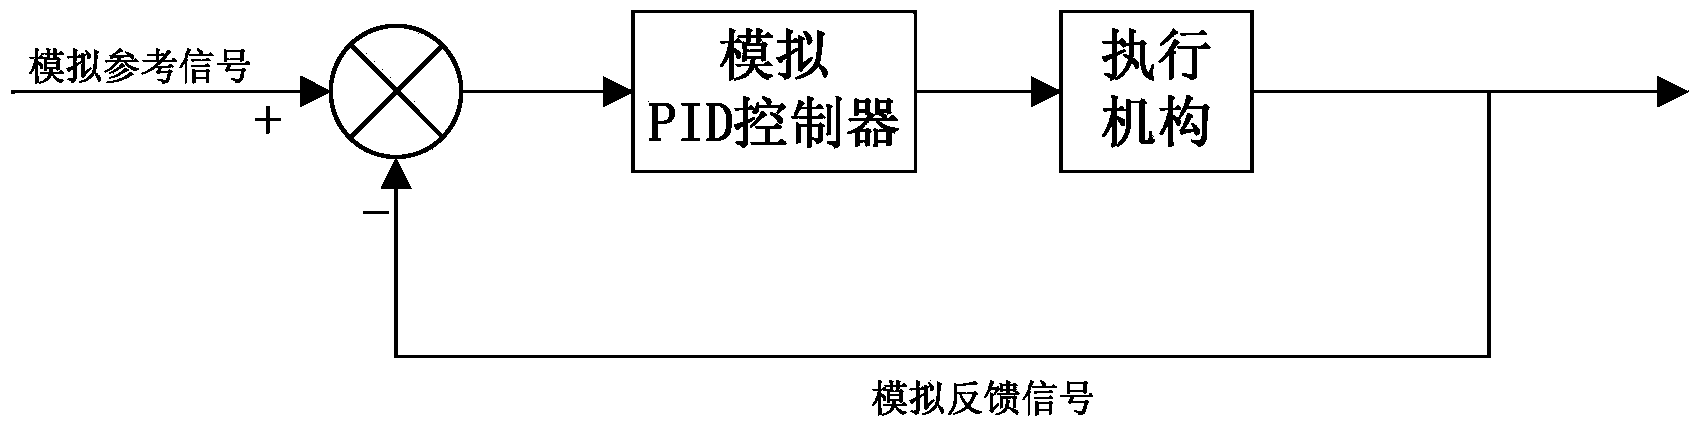 Analog PID control system and method based on digital prediction algorithm